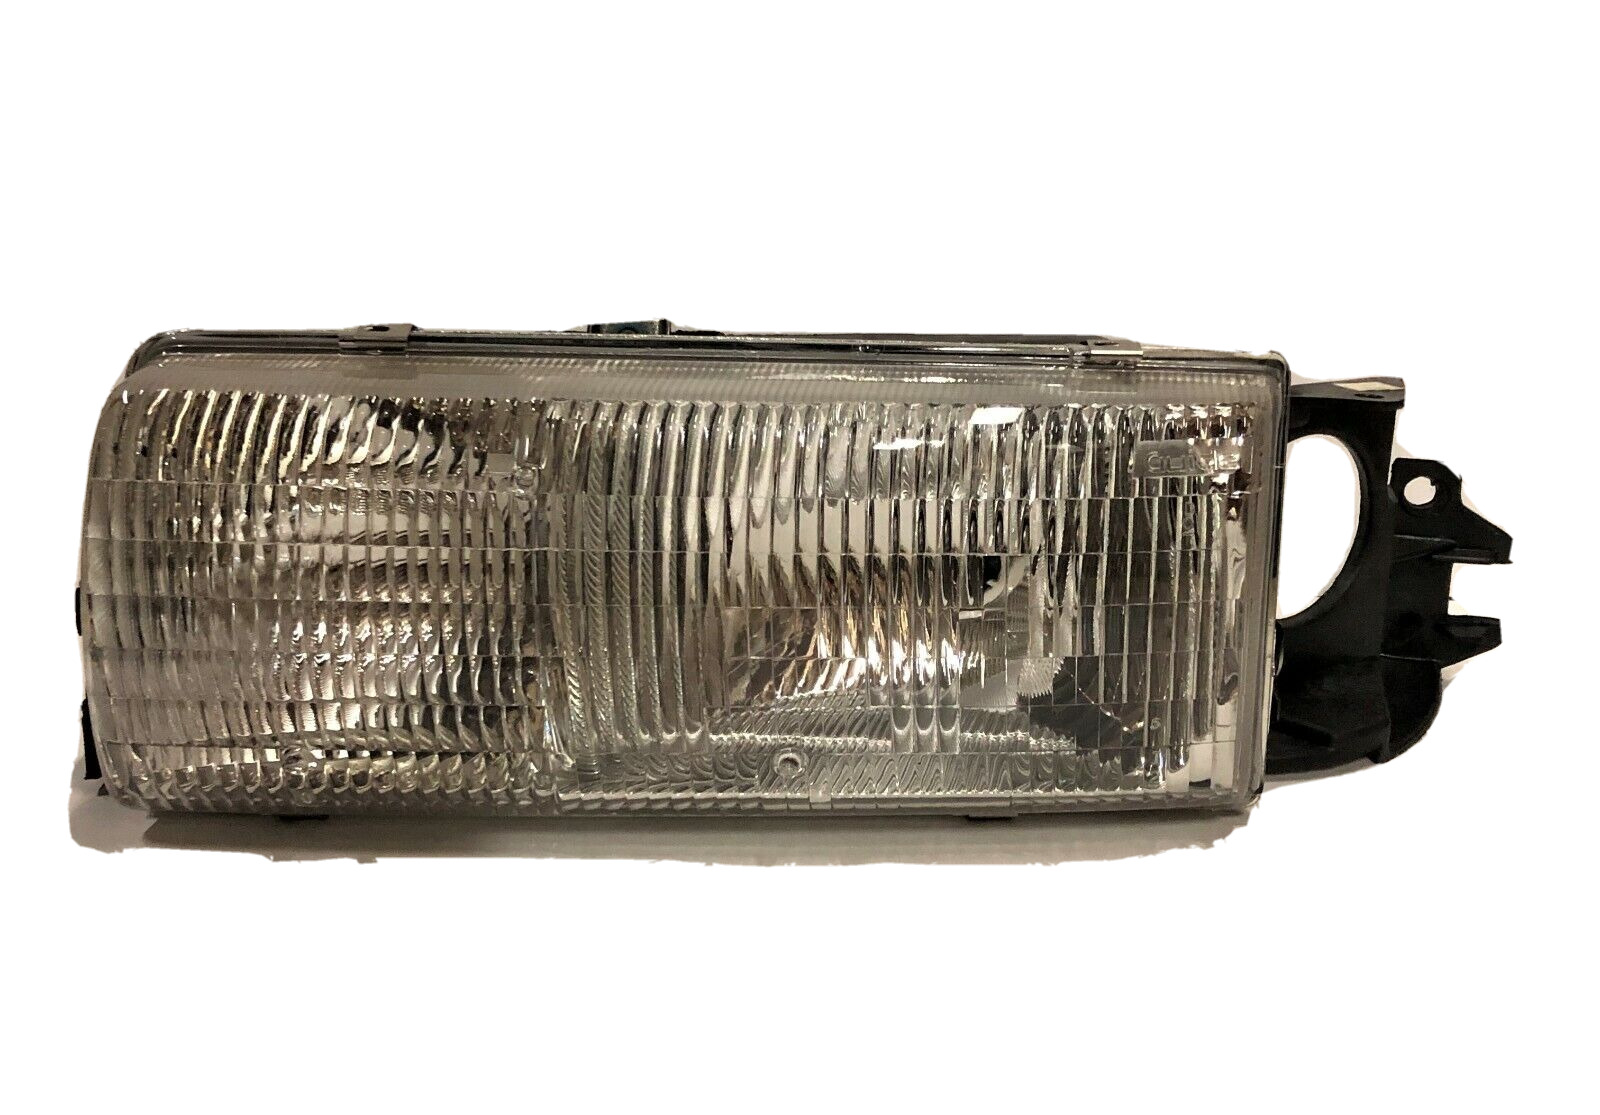 GM Headlamp #16519235 - Caprice (\'91-\'96), Impala (\'94-\'96) - Driver\'s Side